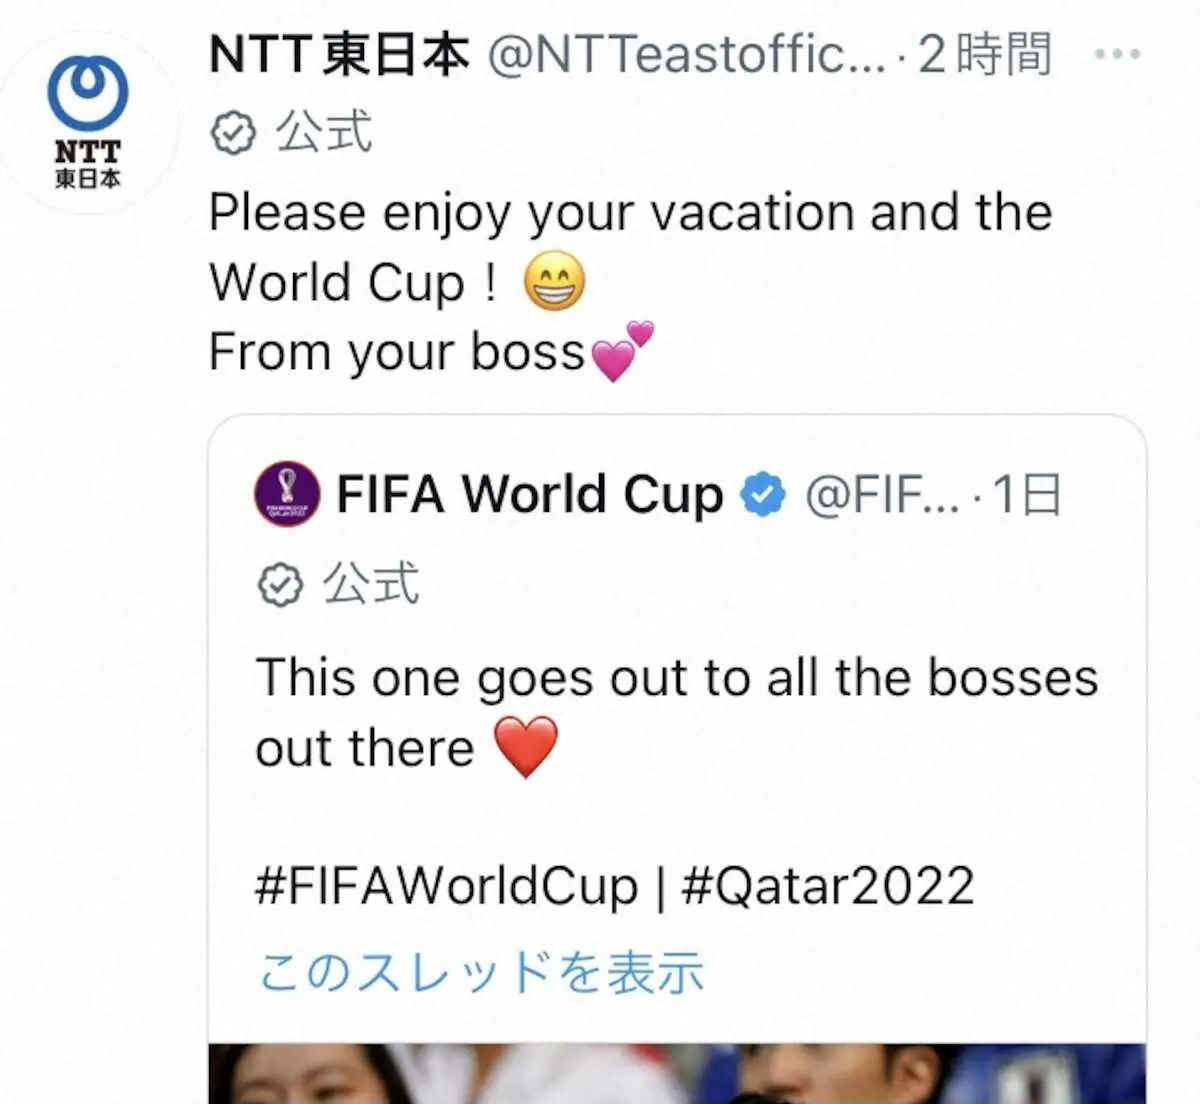 NTT東日本の公式ツイッター(@NTTeastofficial)から